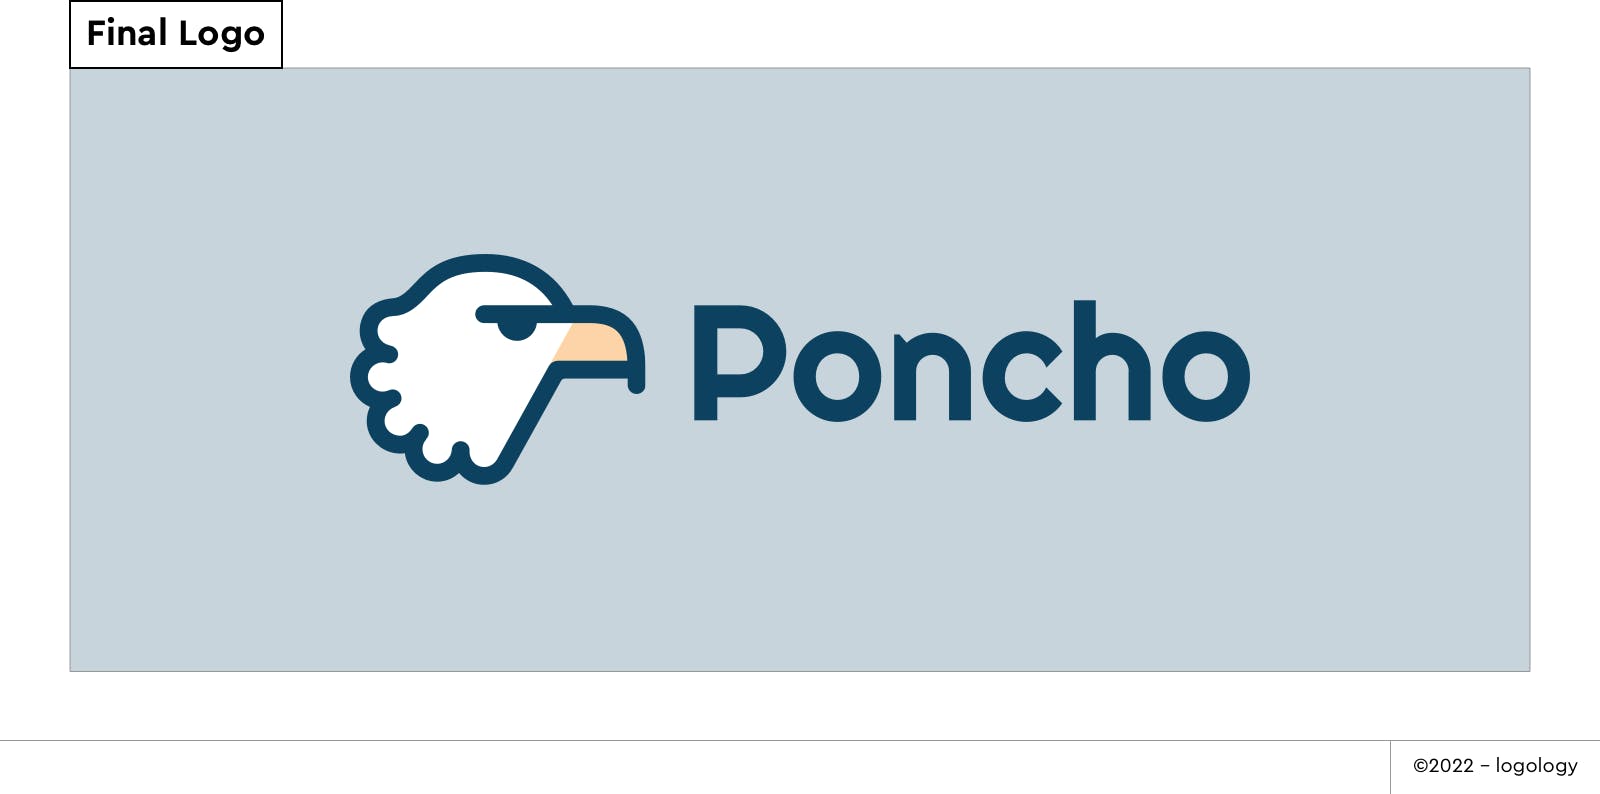 Final logo design for Poncho - a dynamic bald eagle symbol